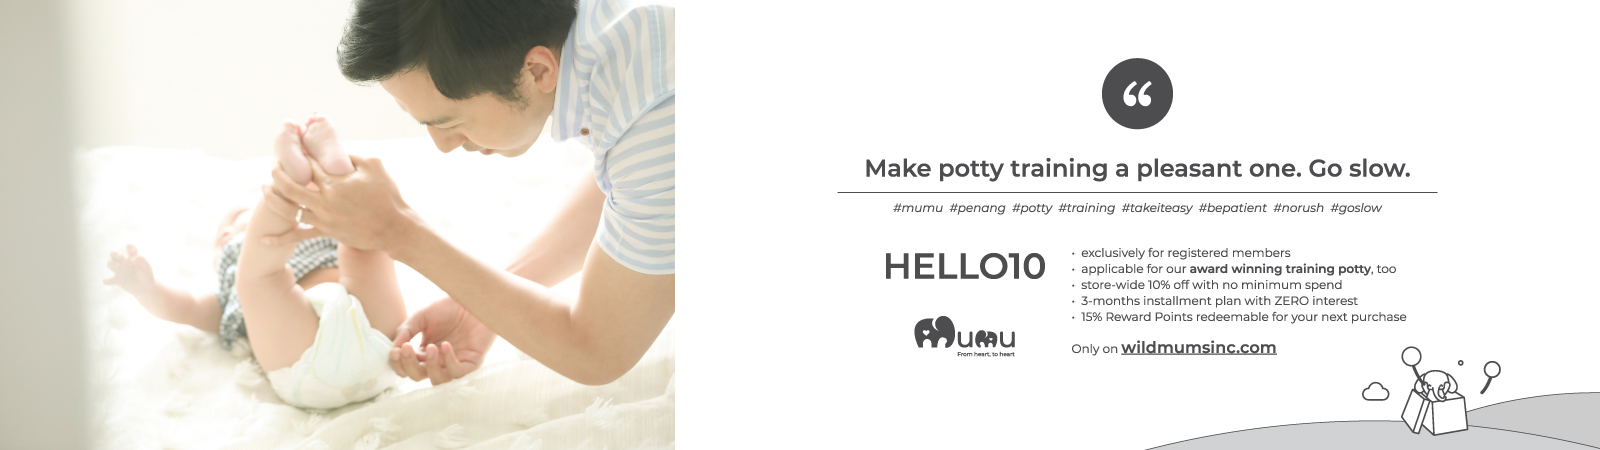 Euphony: Make potty training a pleasant one